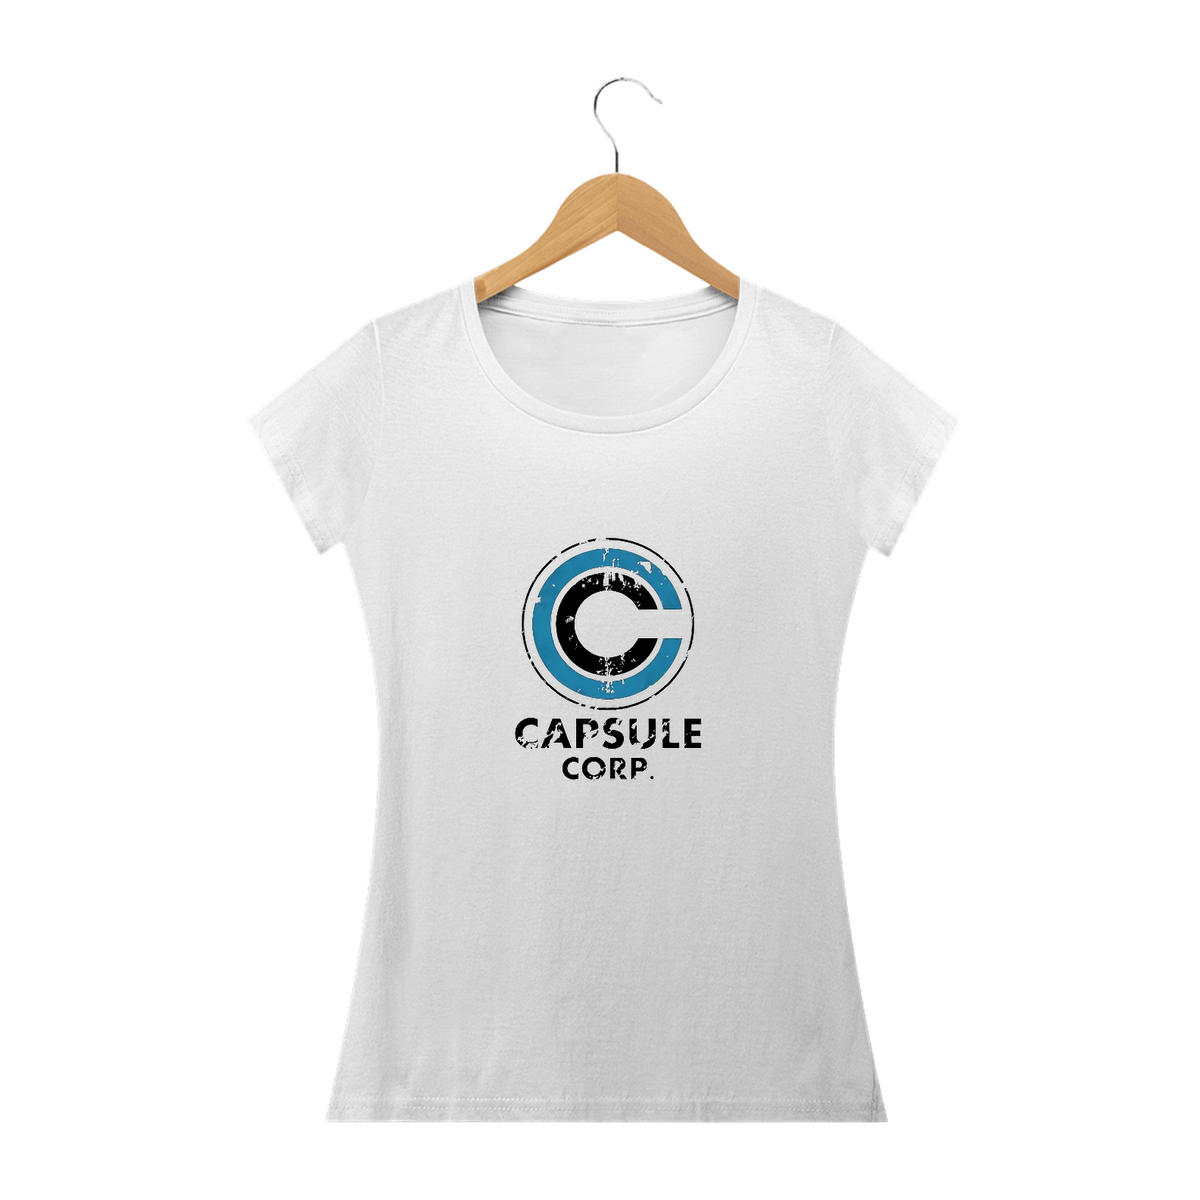 Nome do produto: Camisa Baby long Capsule Corp.